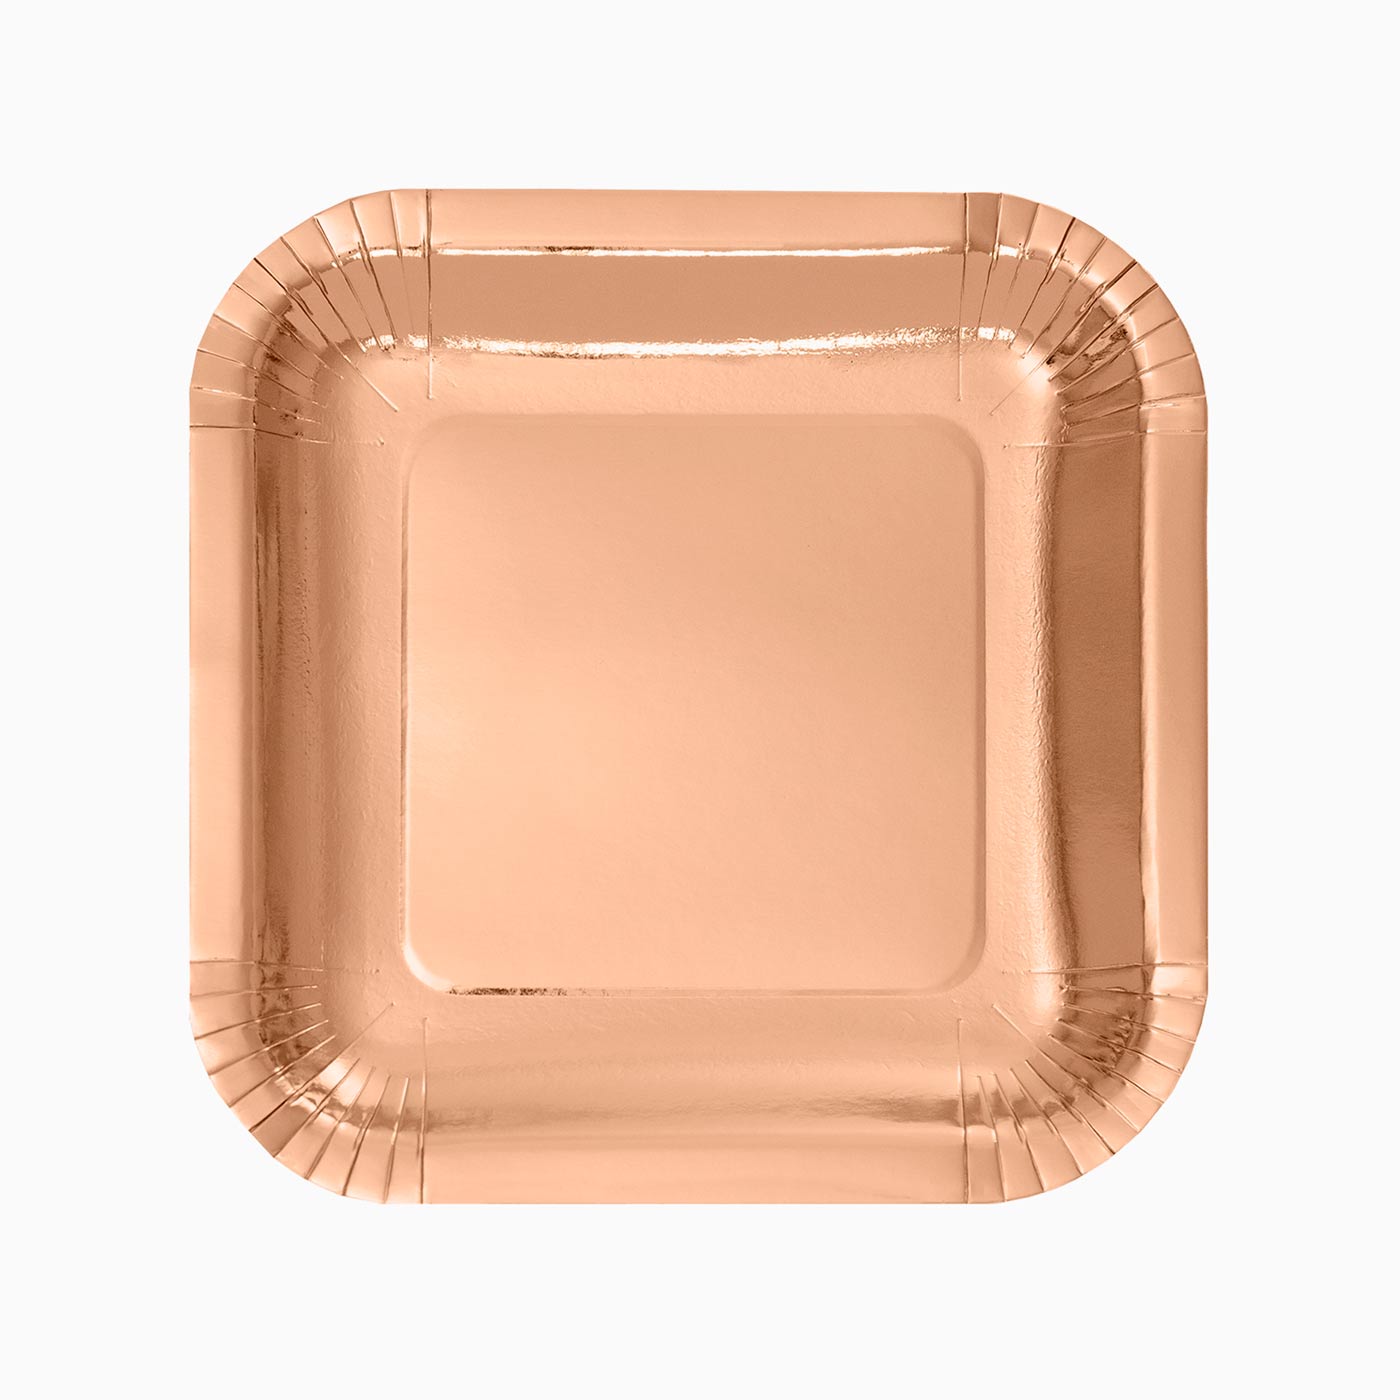 Metallic square cardboard plate 20 x 20 cm pink gold